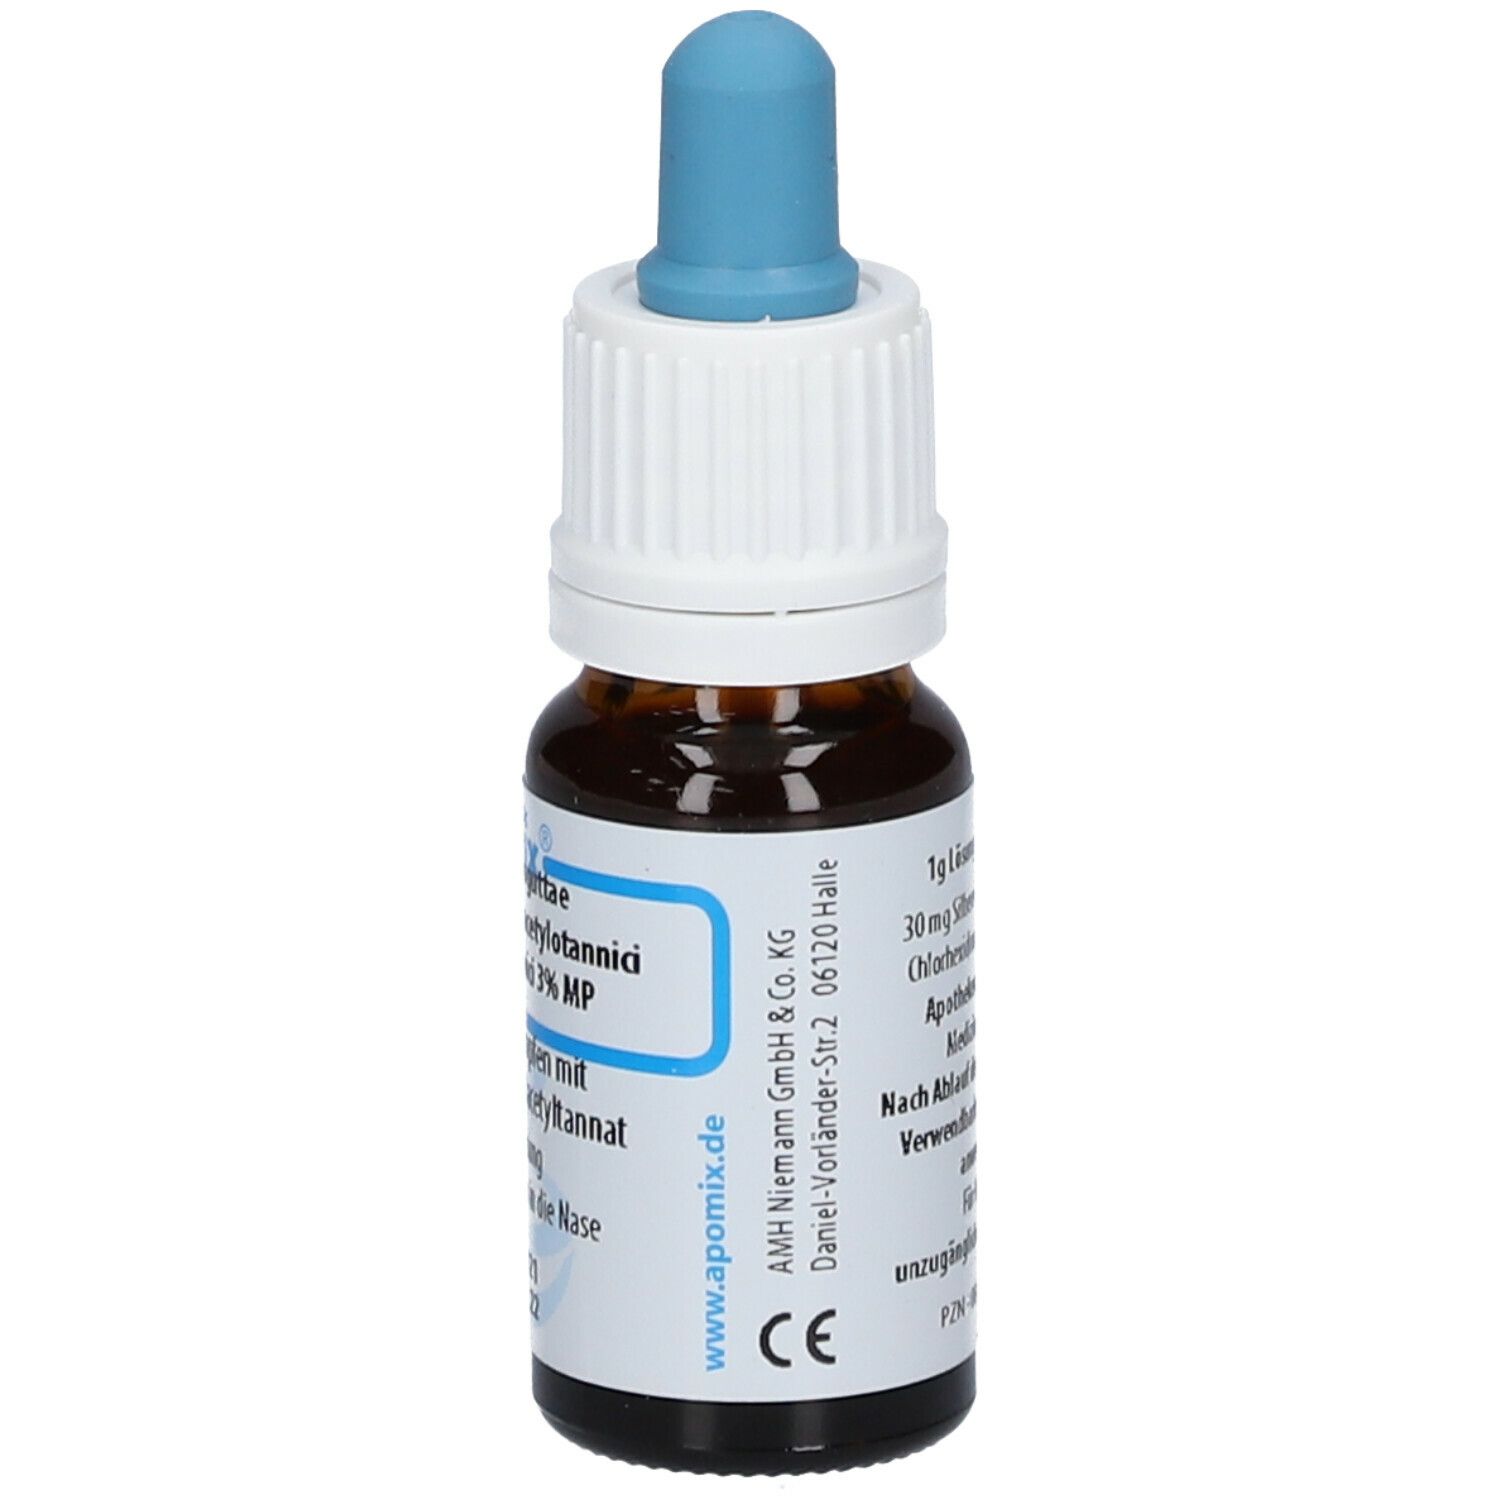 apomix® Rhinoguttae Argenti diacetylotannici proteinici 3 % MP